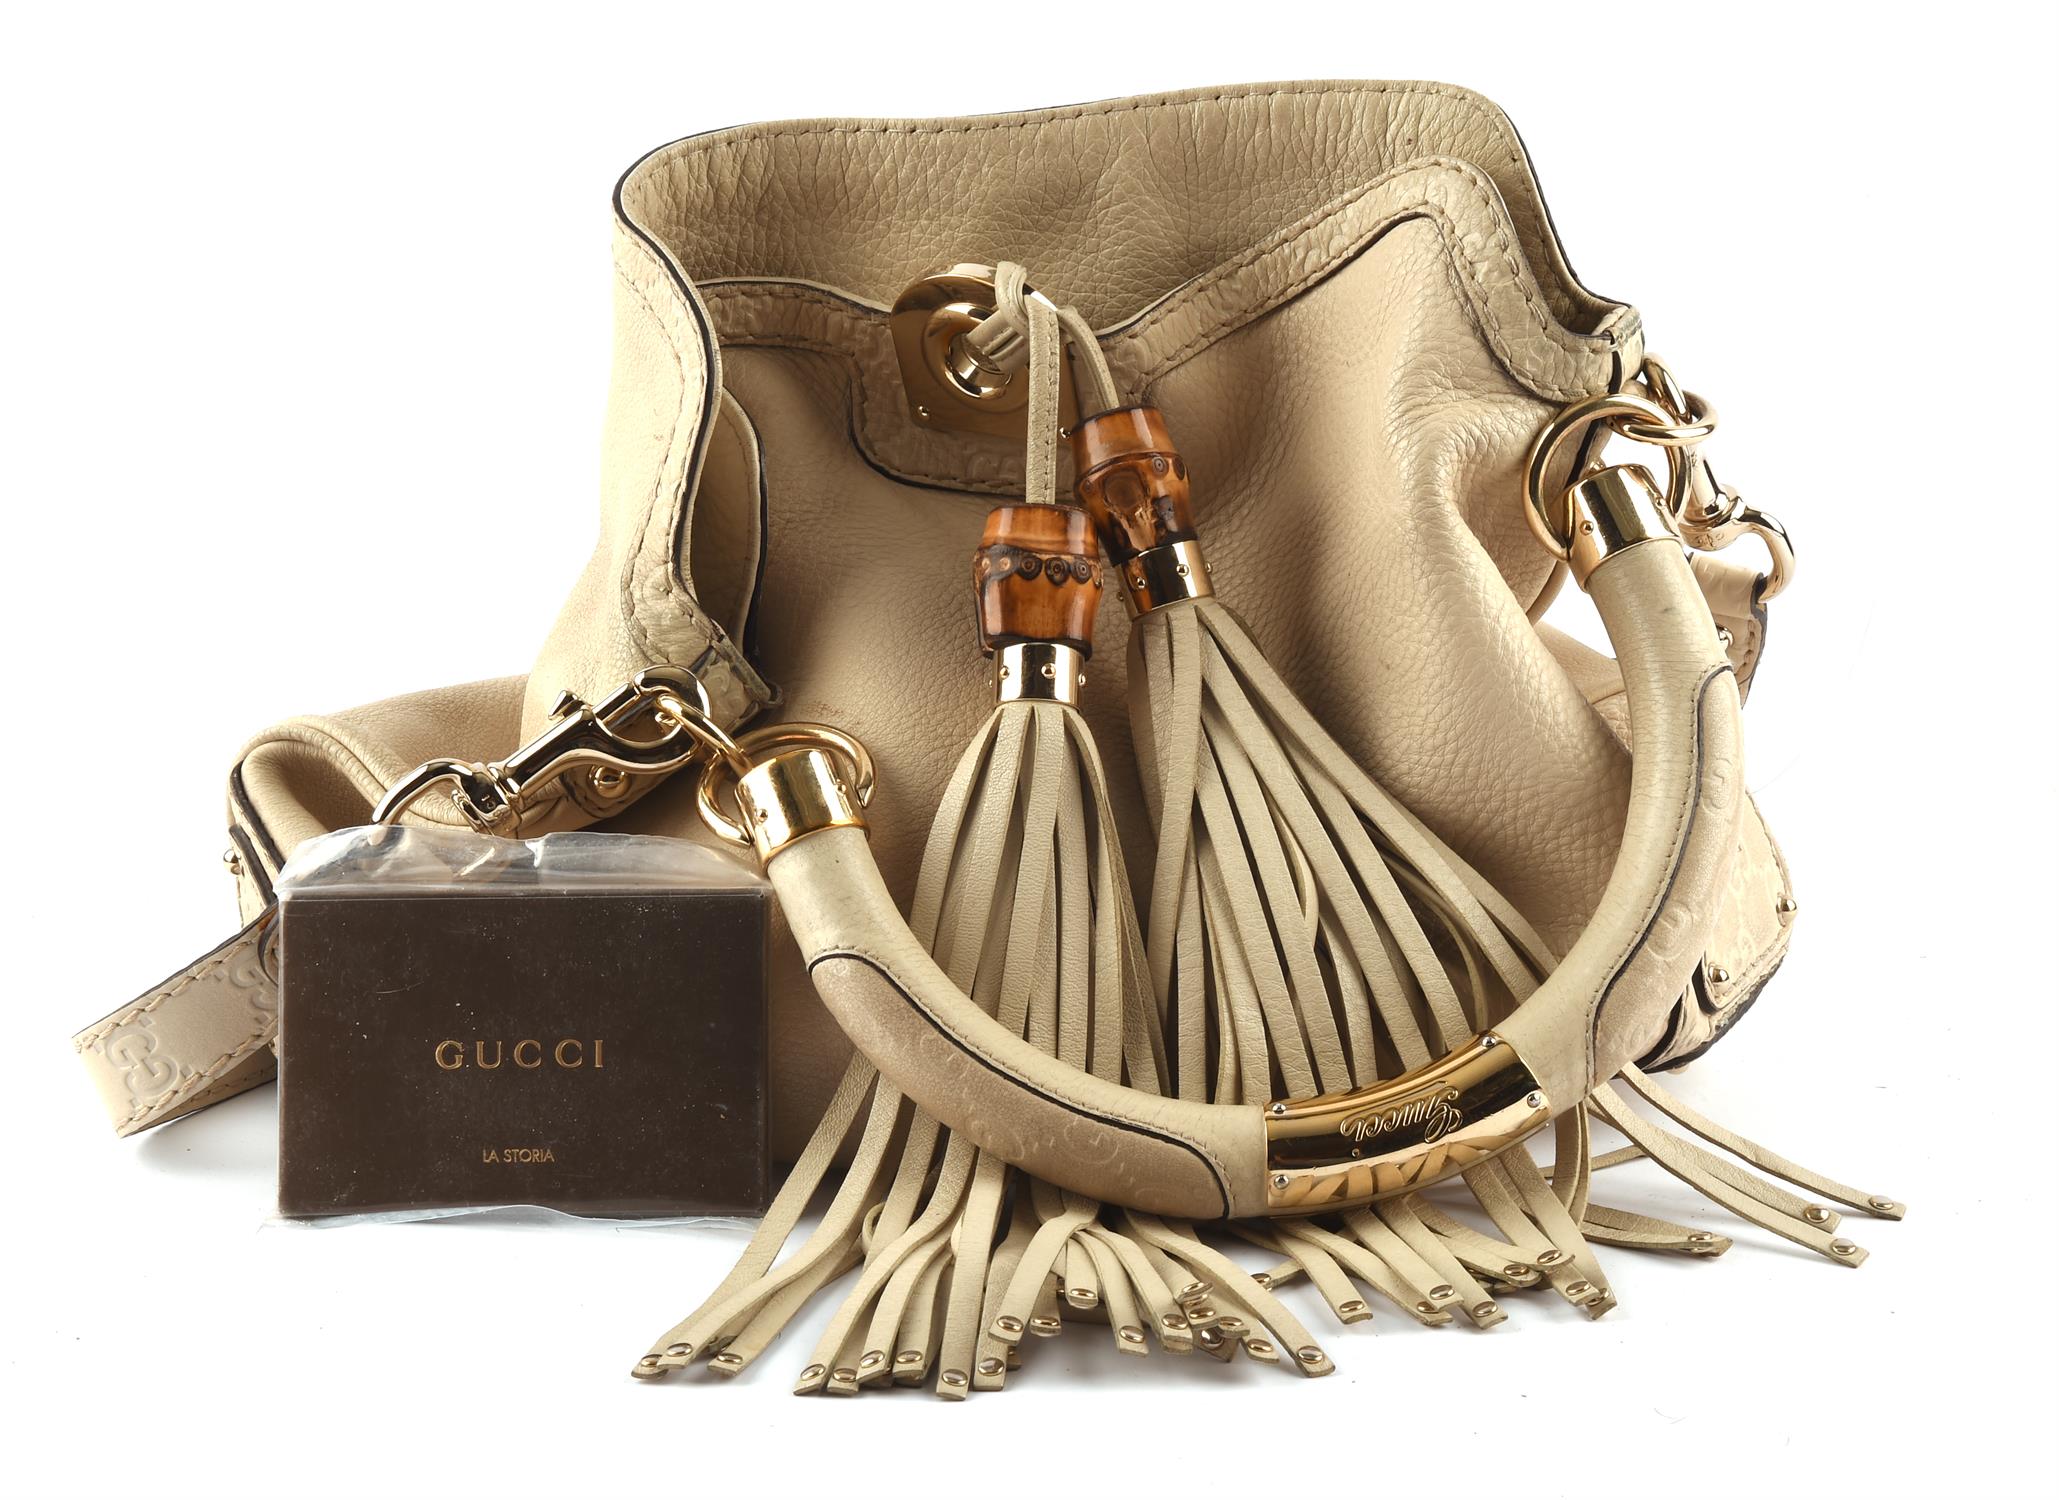 ADDENDUM LOT * GUCCI Jackie stone leather handbag with gold coloured hardware.(38cm x33cm x 3cm)